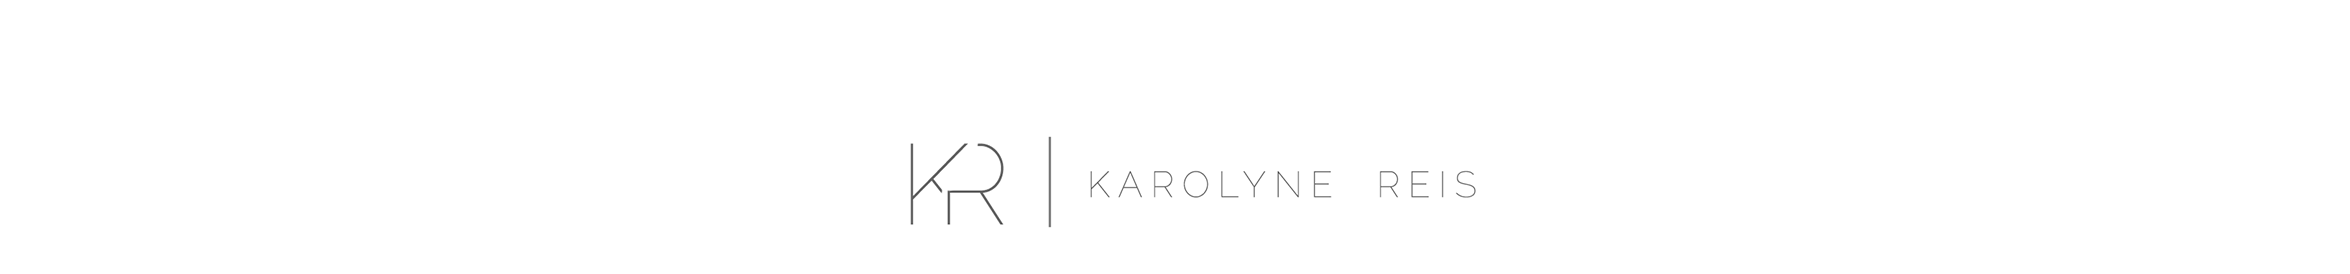 Profil-Banner von Karolyne Reis